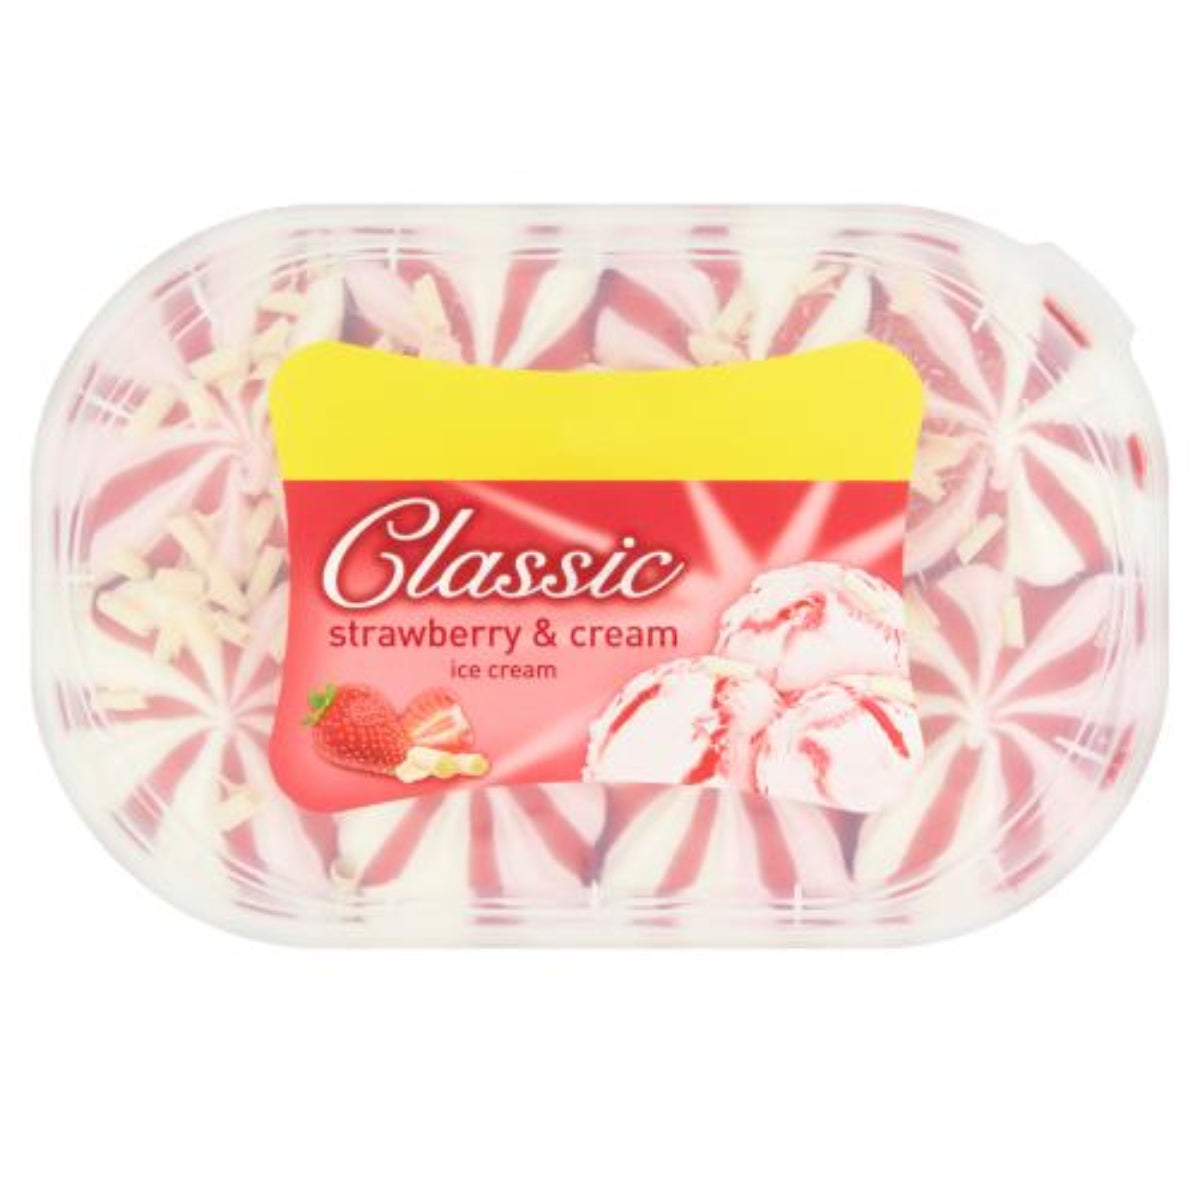 Classic - Strawberry & Cream Ice Cream Tub - 900ml in a plastic container.